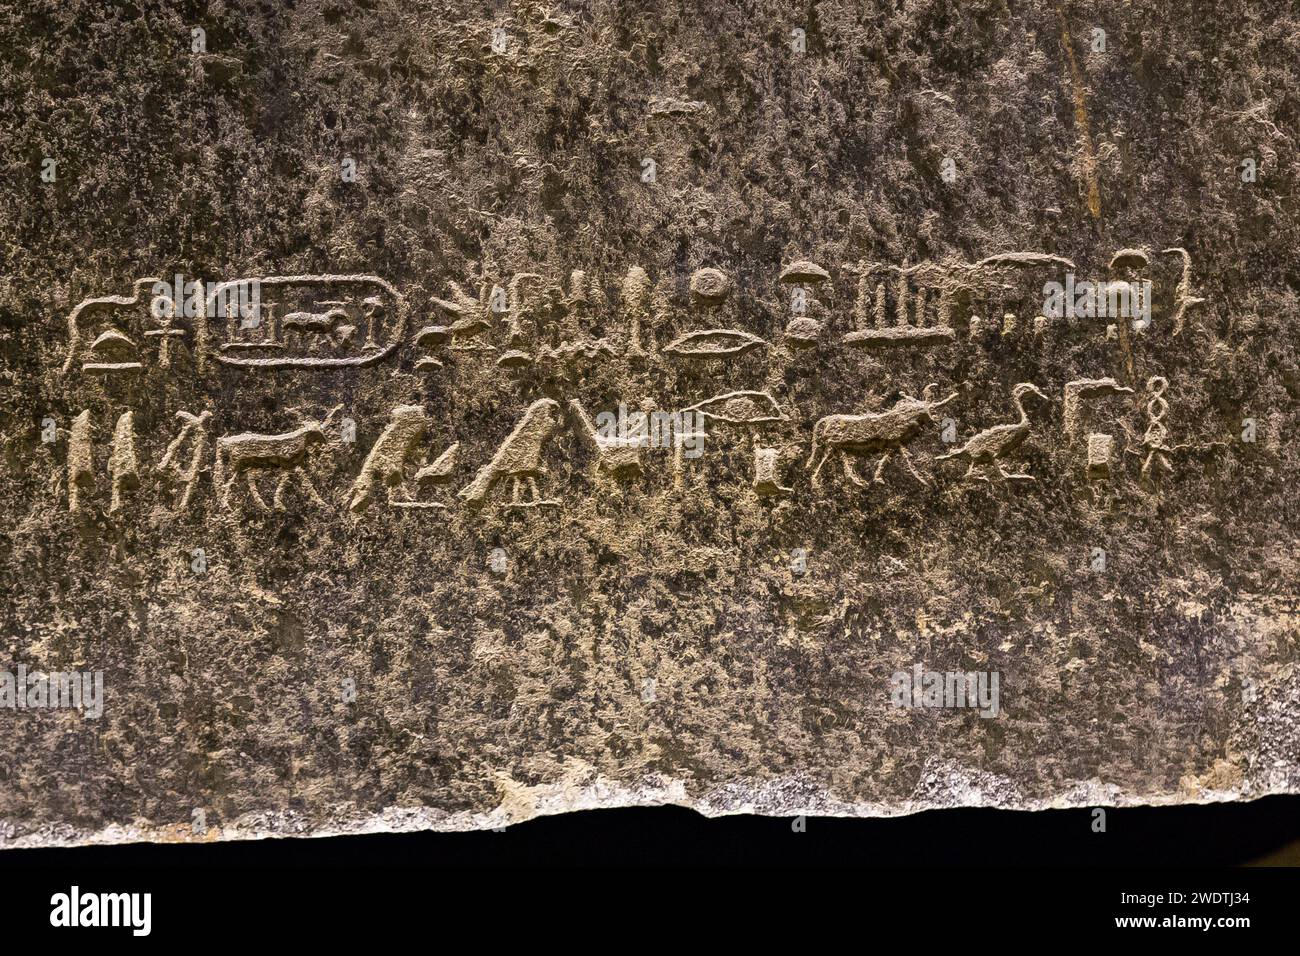 Egypt, Saqqara, Serapeum necropolis : A dedication text to an Apis bull, by the pharao Kababash. Stock Photo